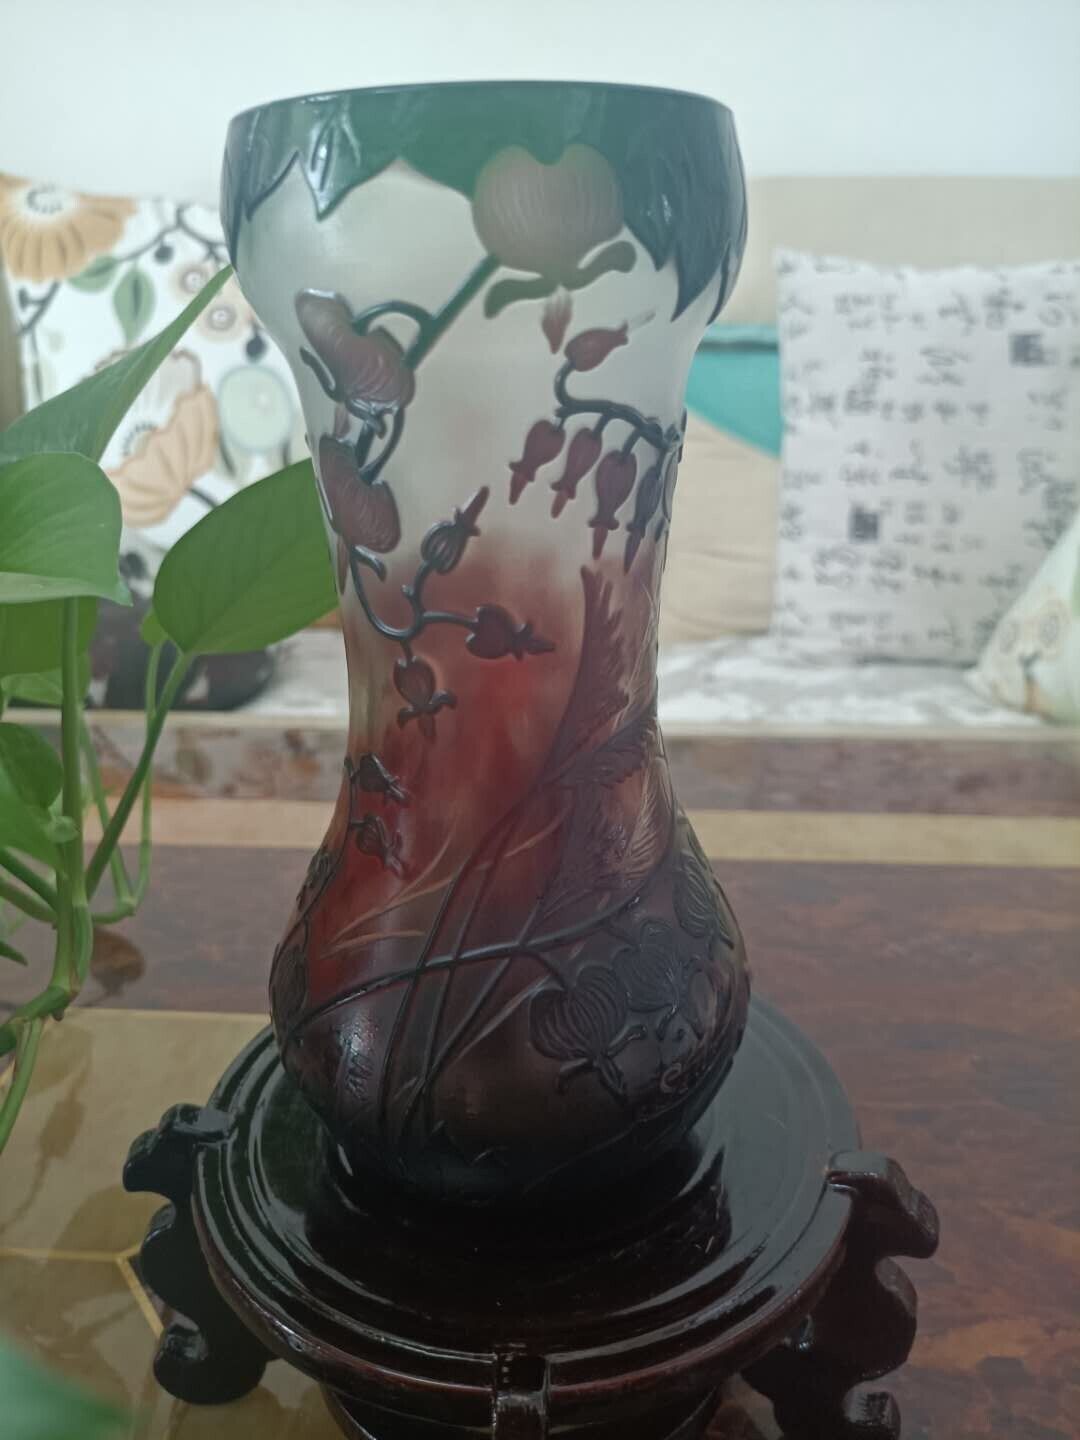 Emile Galle’style Art Glass Vase,